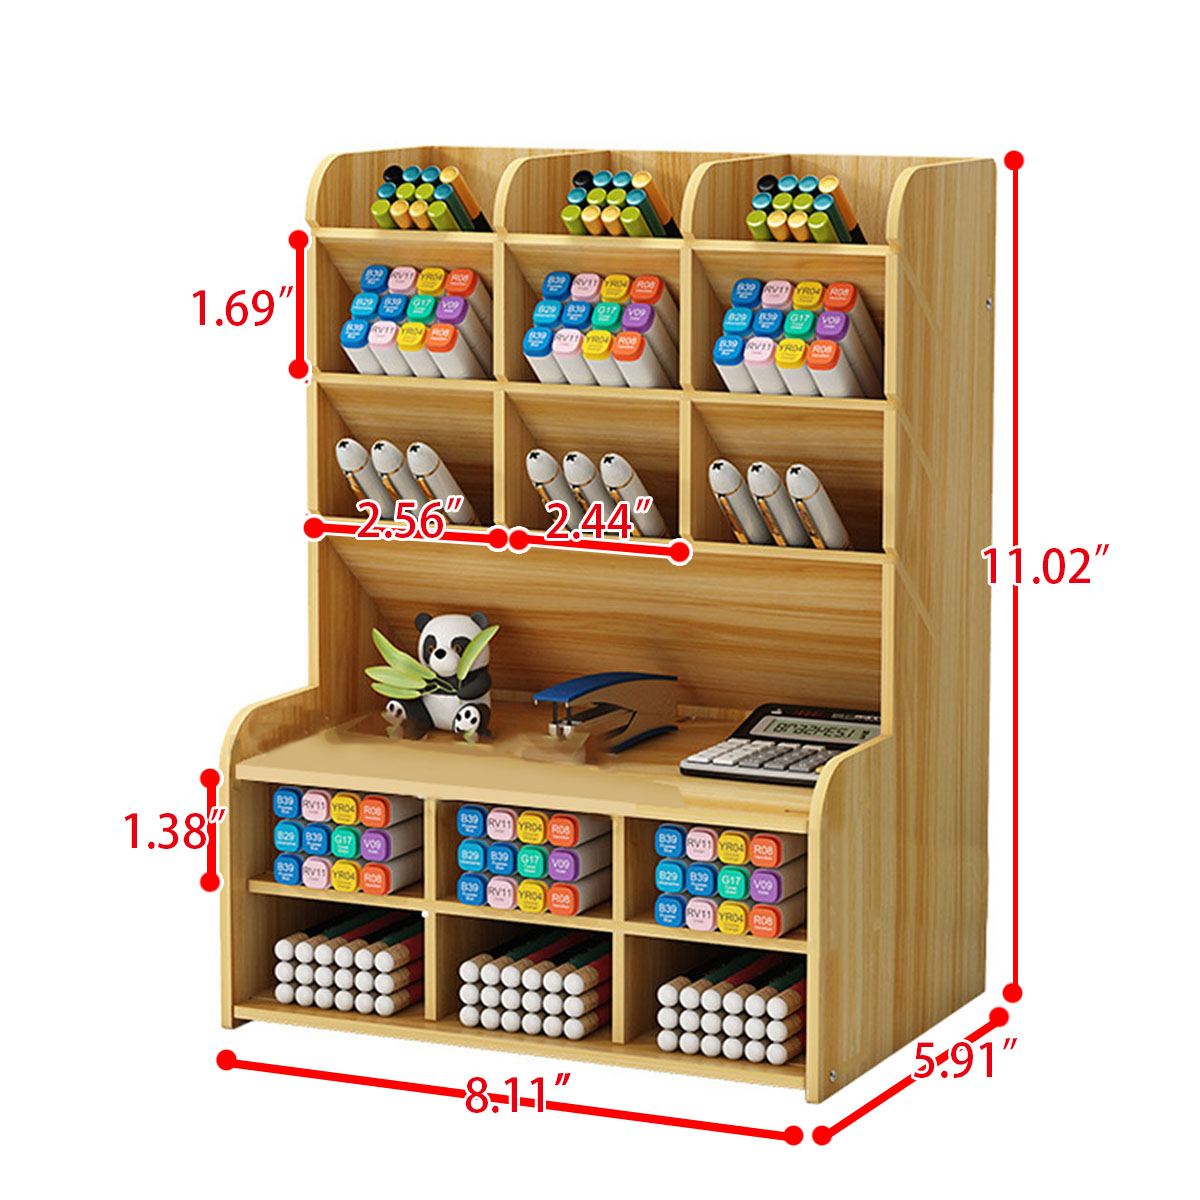 Wooden-Pencil-Pen-Storage-Box-Tilting-Desktop-Stationary-Holder-Organizer-Home-Office-Supplies-Stora-1745793-15